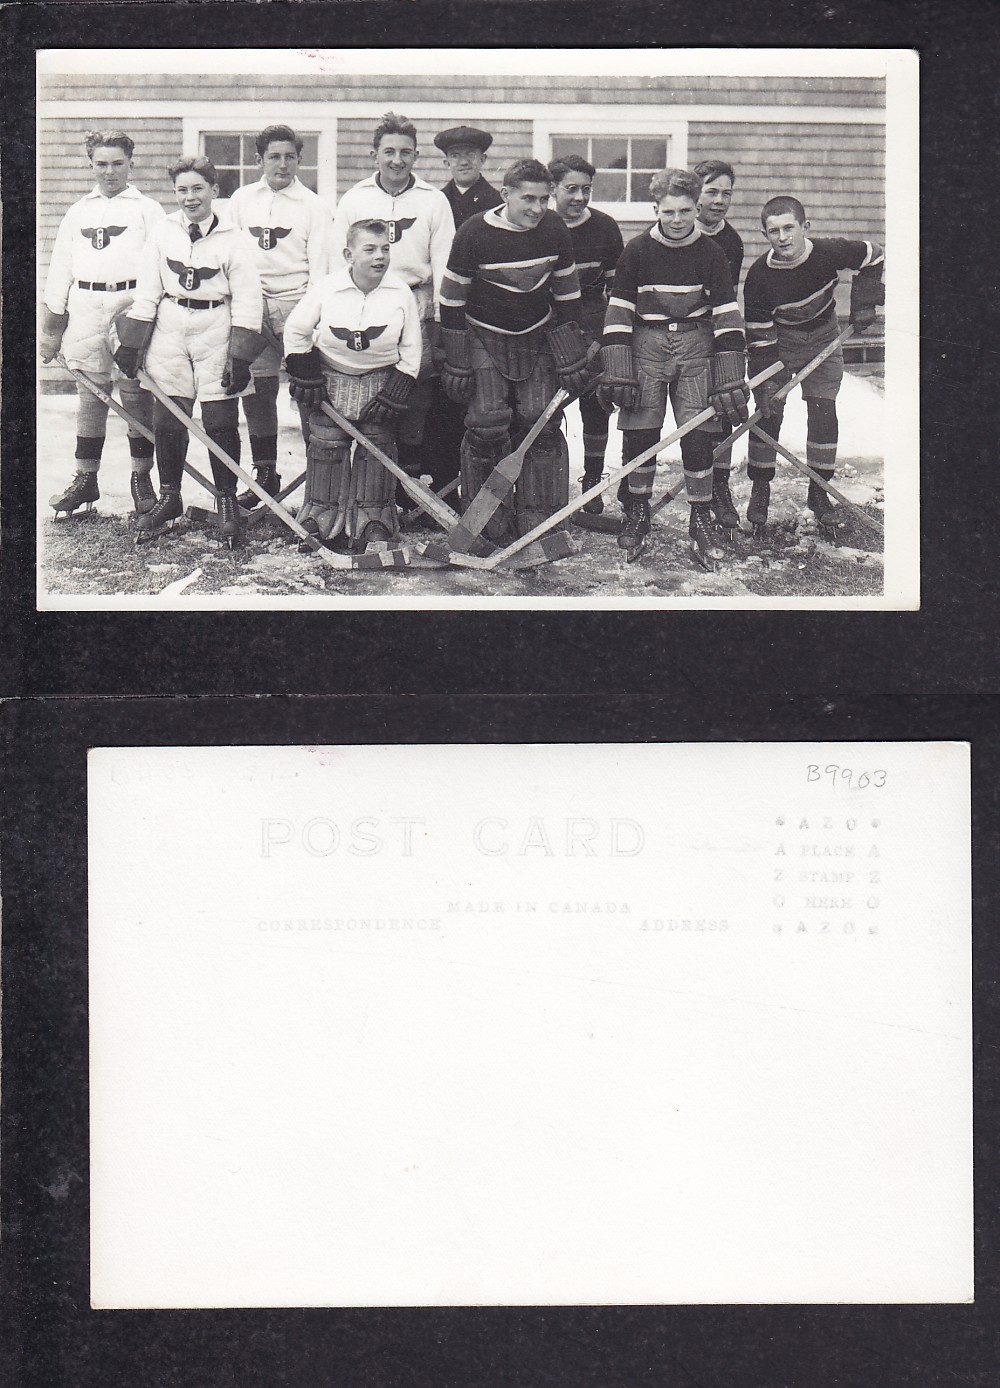 1920'S HOCKEY TEAM POST CARD photo